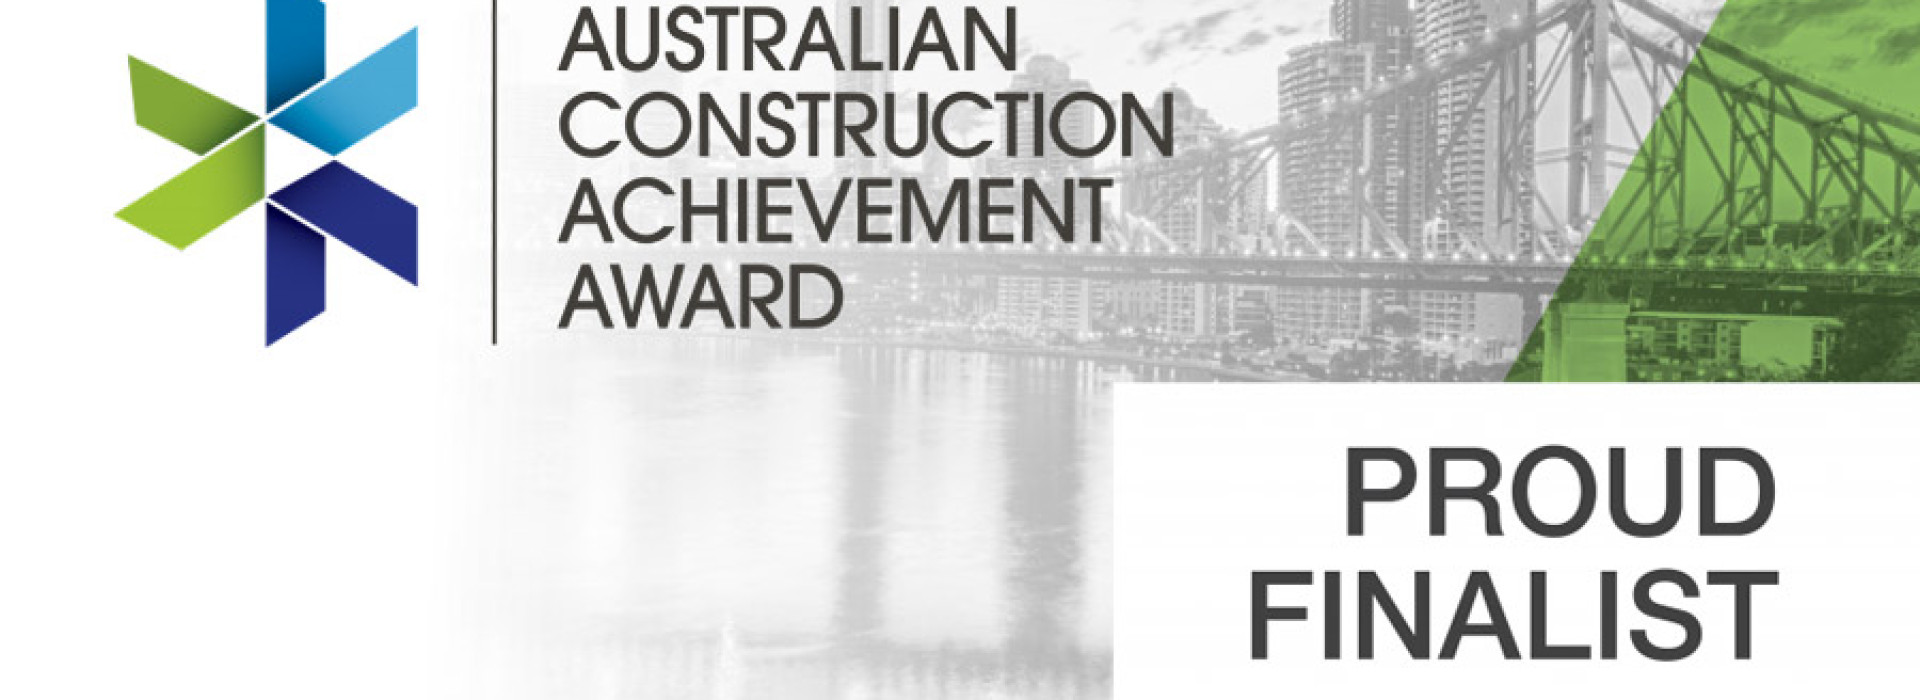 McConnell Dowell finalist for Australian Construction Achievement Award